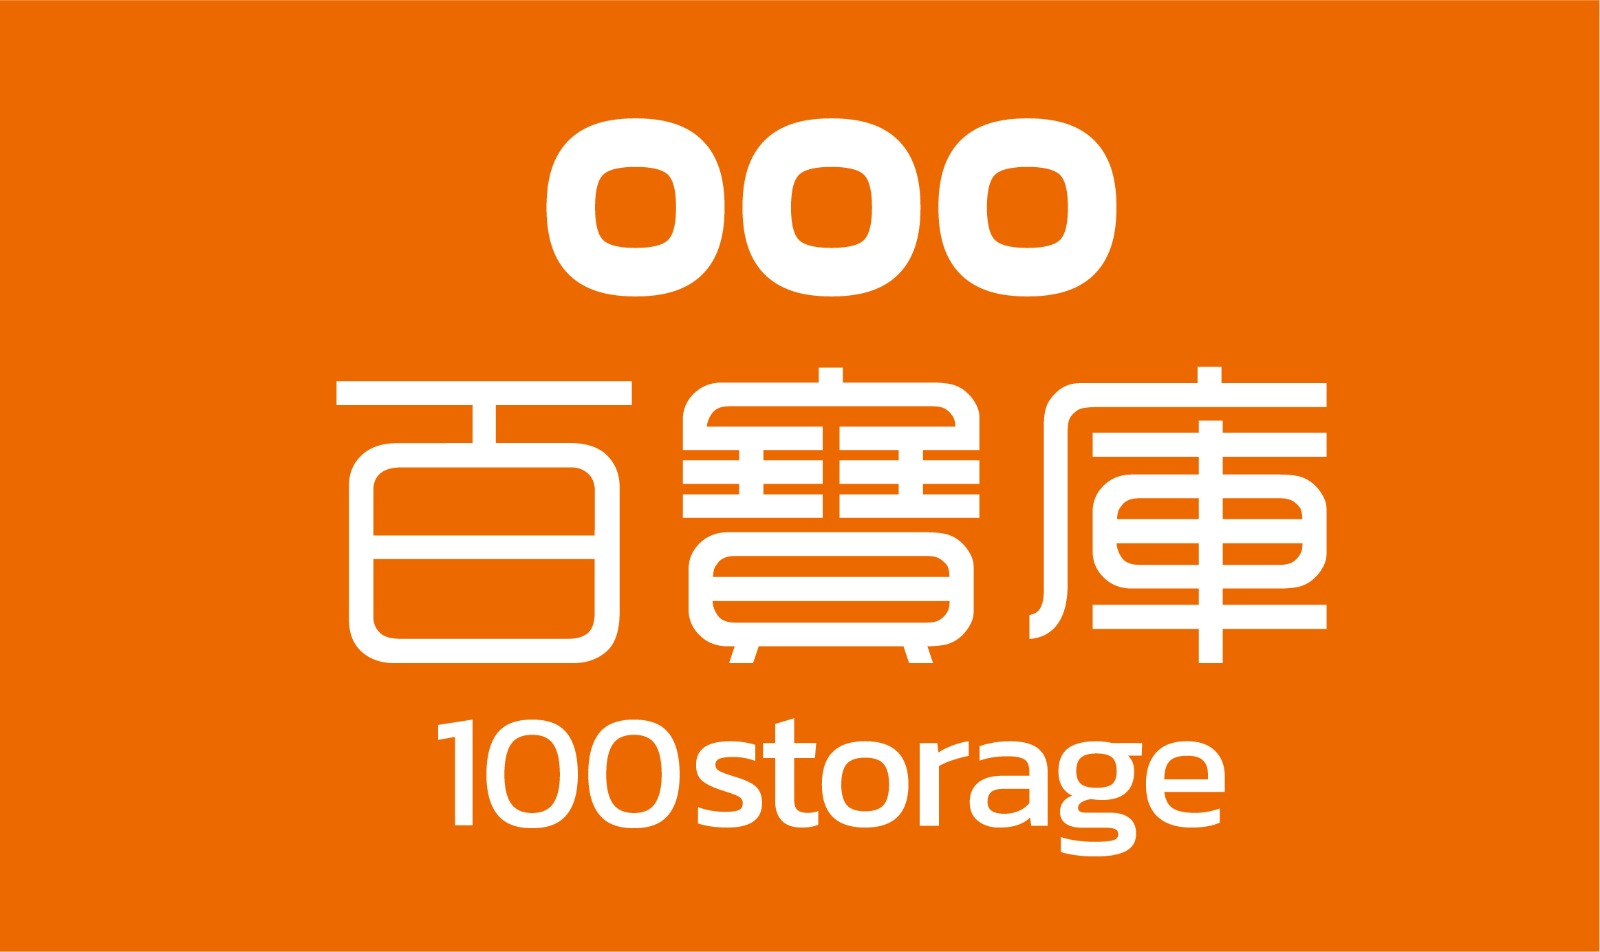 100 storage logo